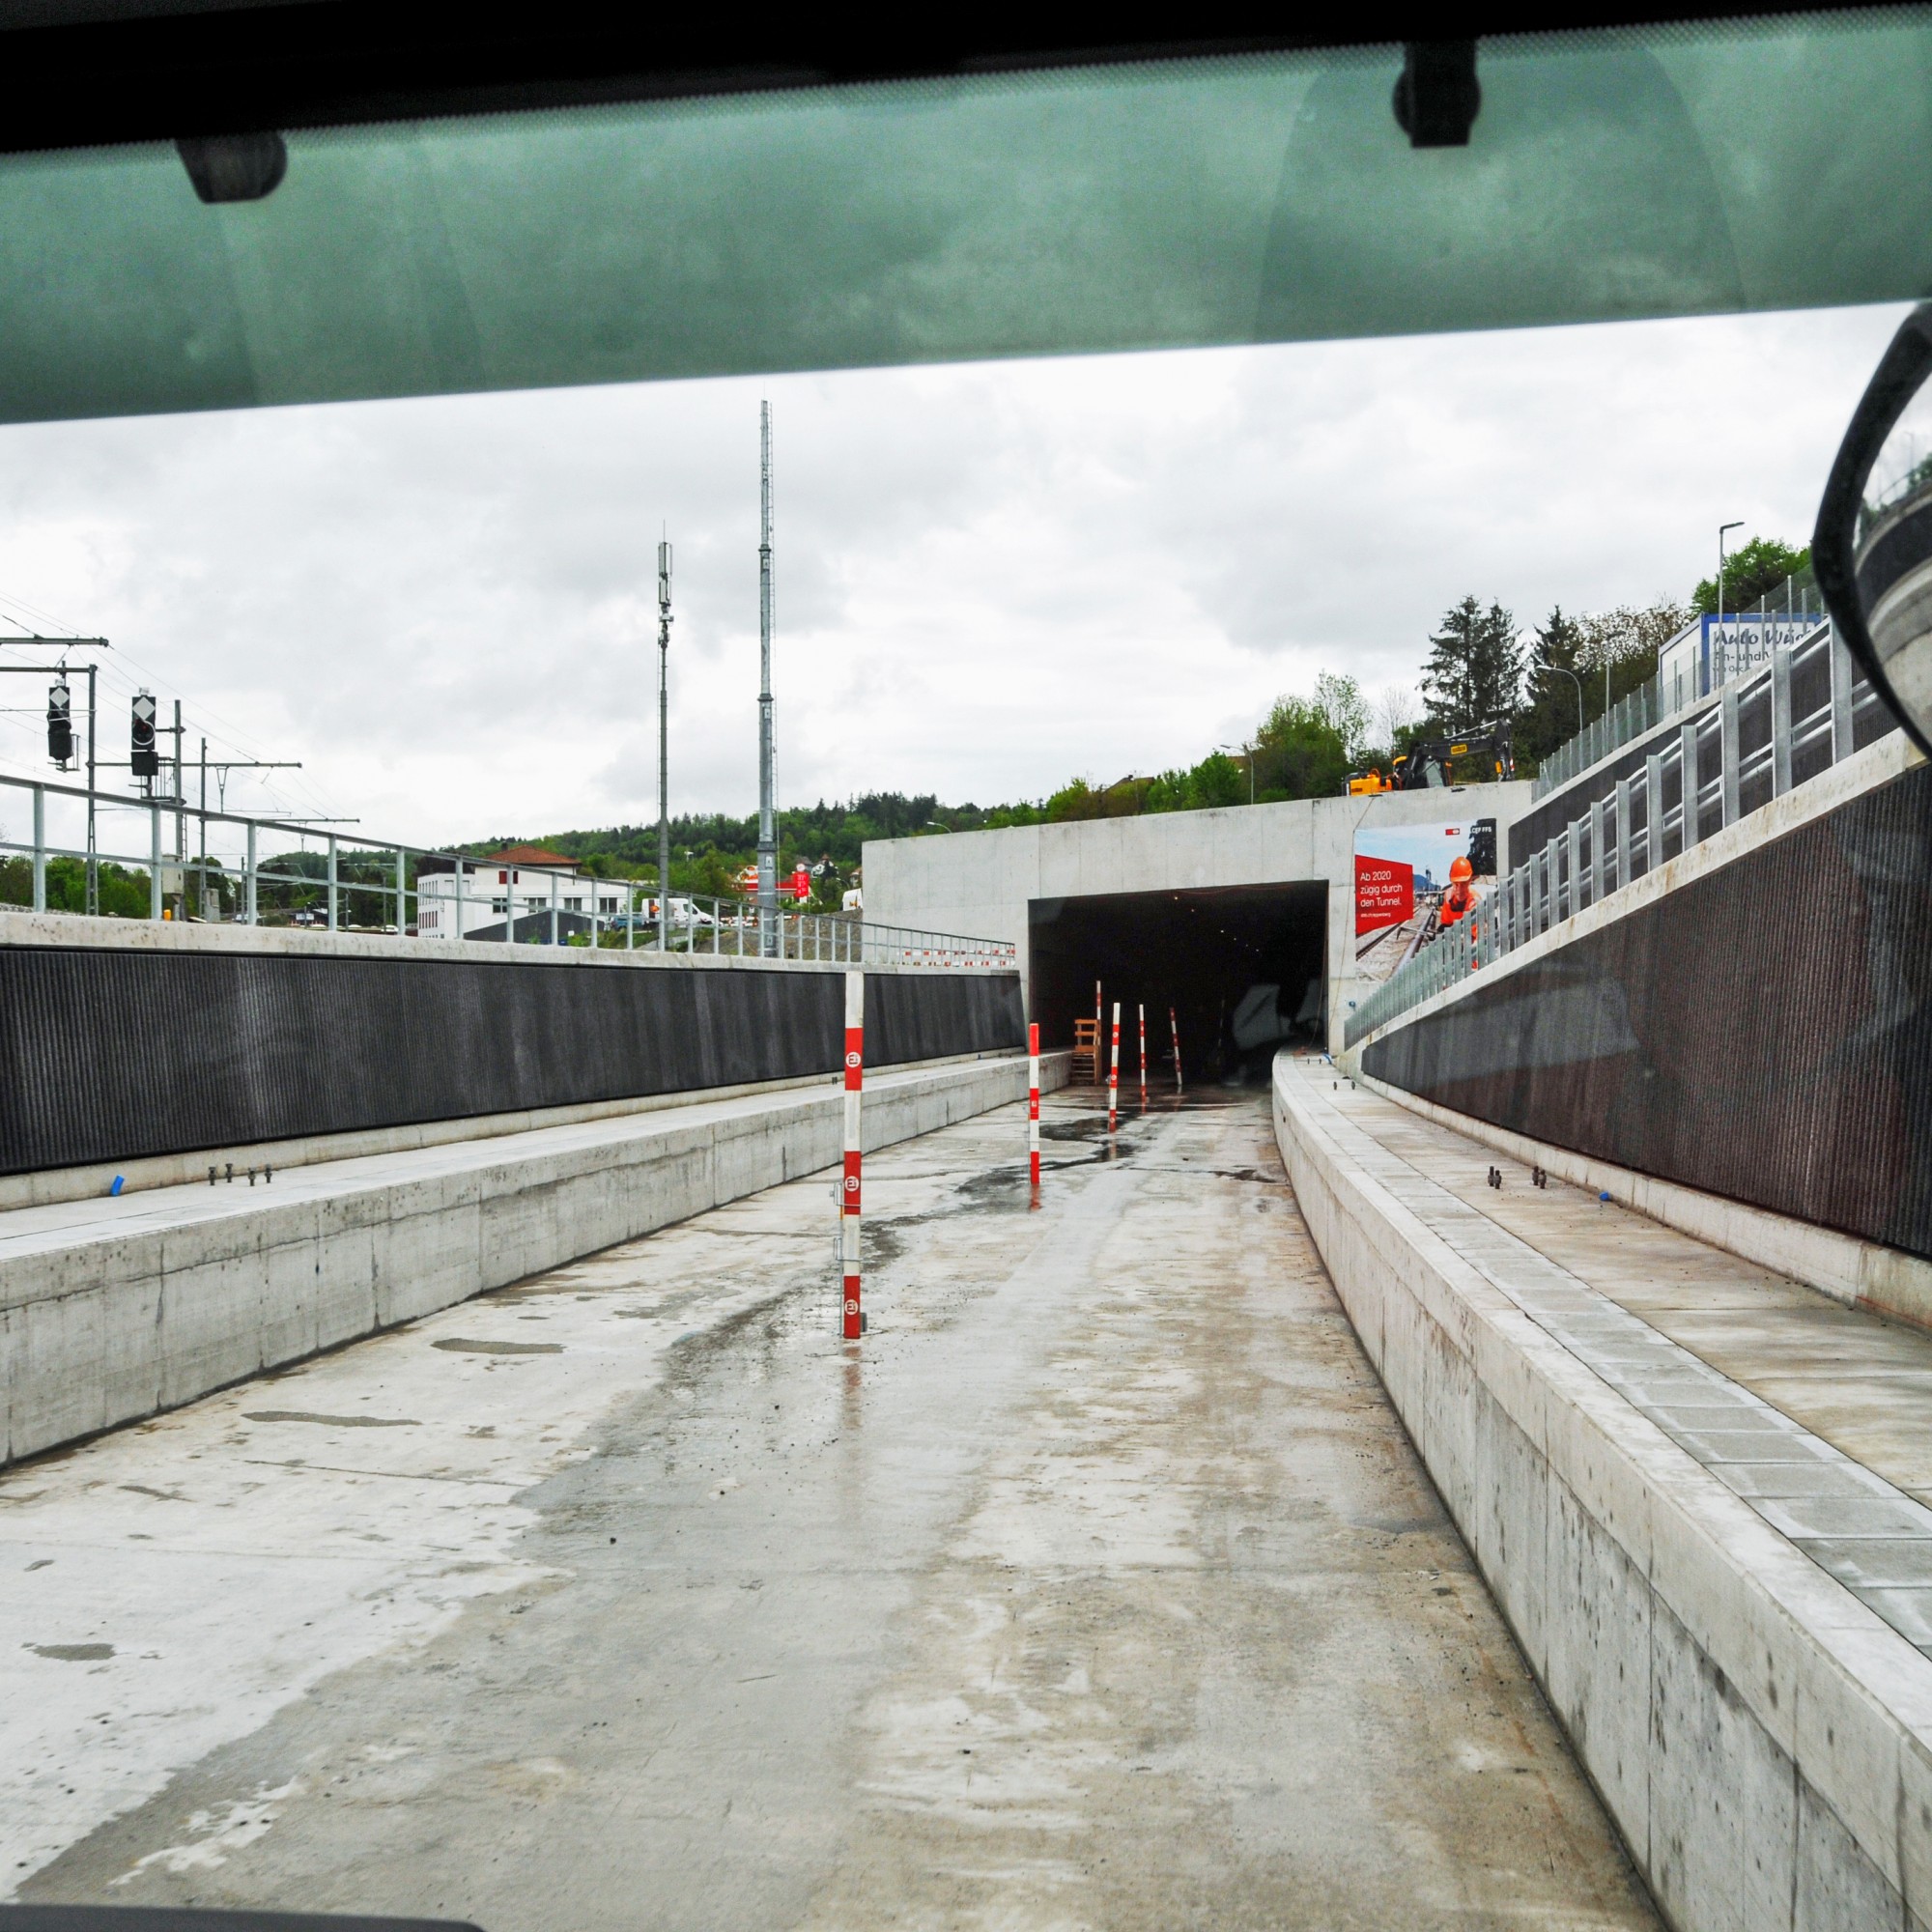 Eppenbergtunnel im Juni 2019.